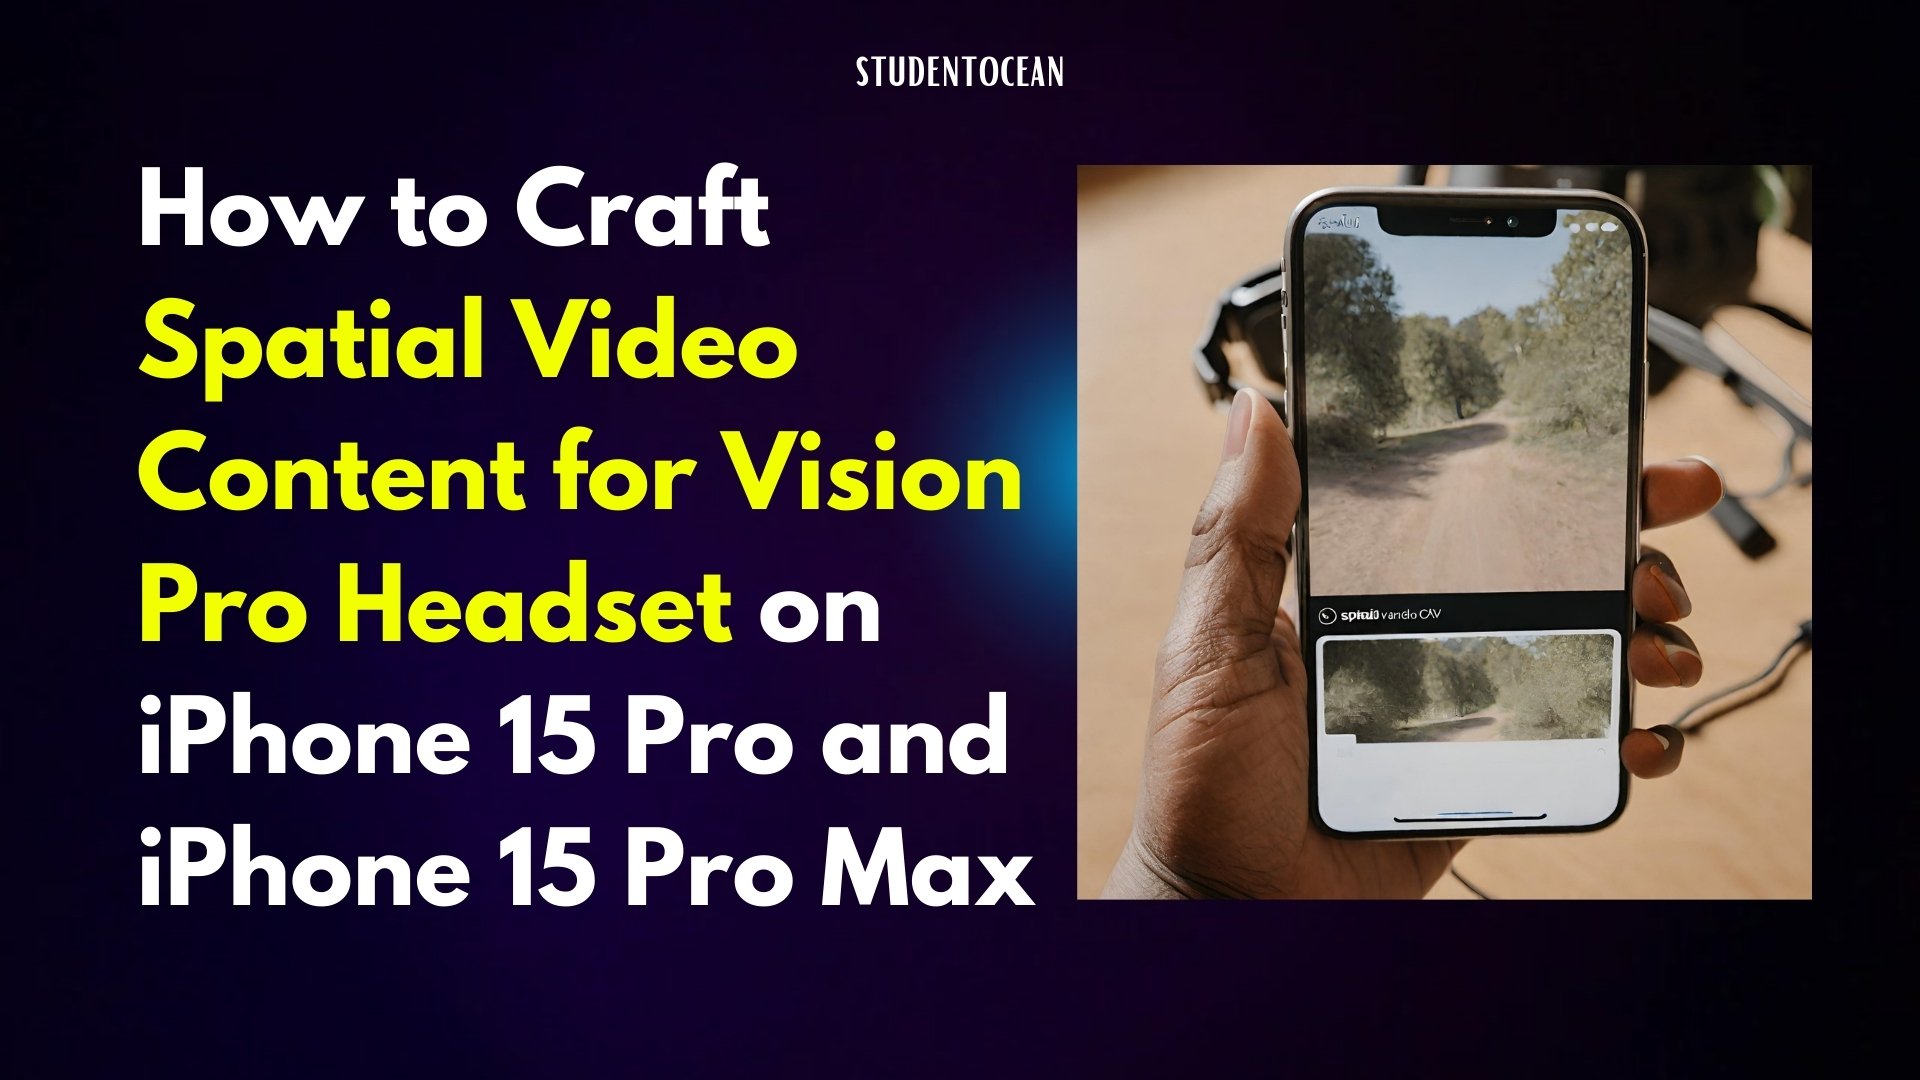 Spatial Video Content